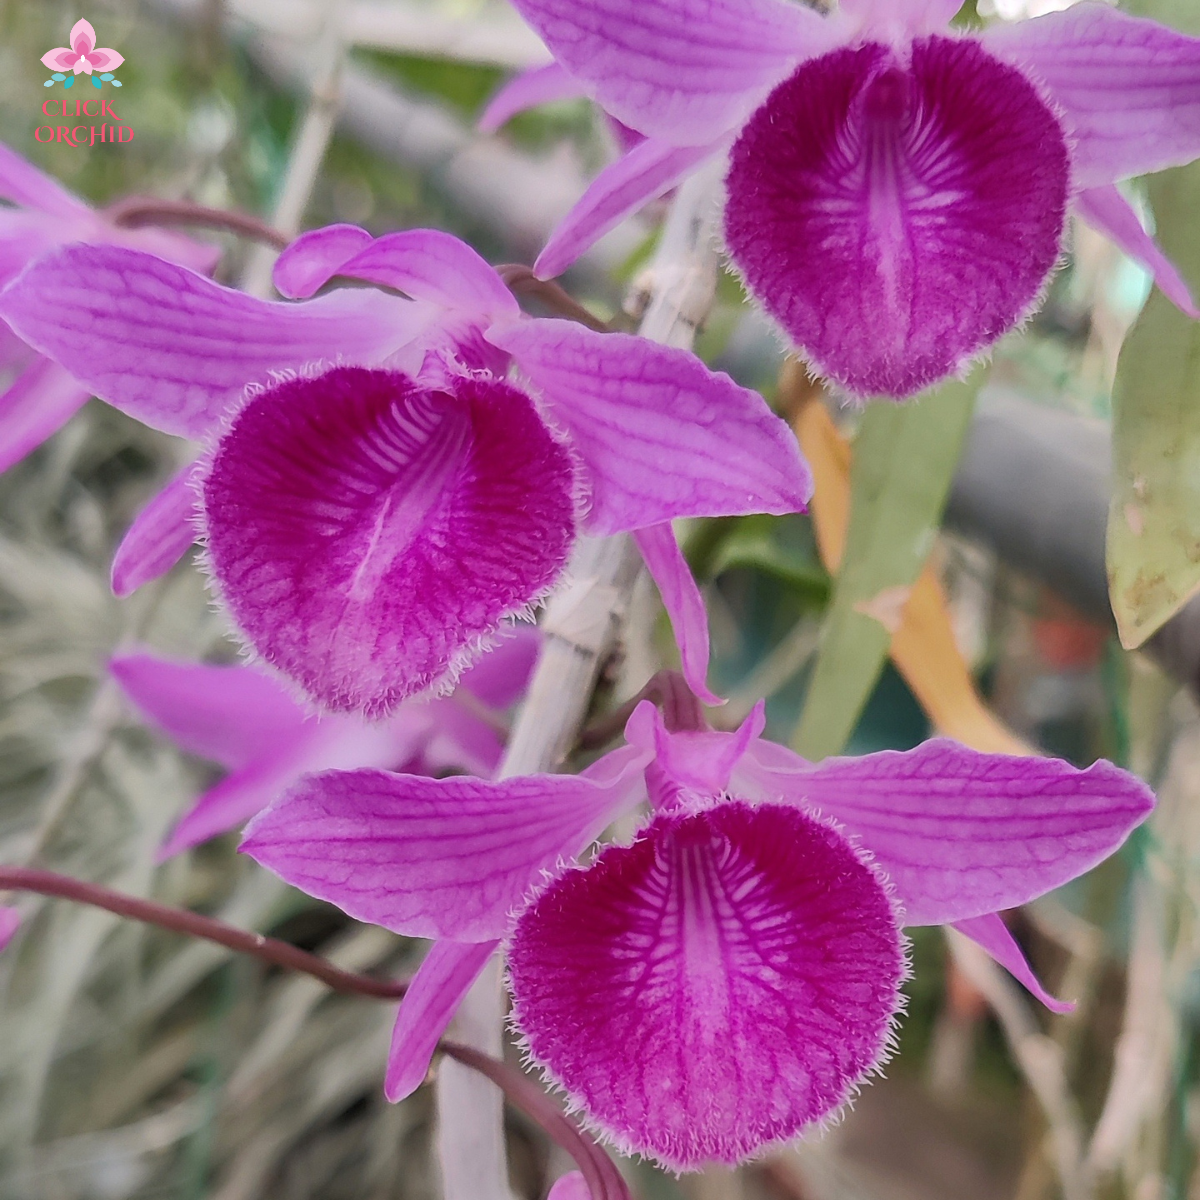 Dendrobium Nestor (Full Lip) Orchid Flower - Exquisite beauty with full lip petals"